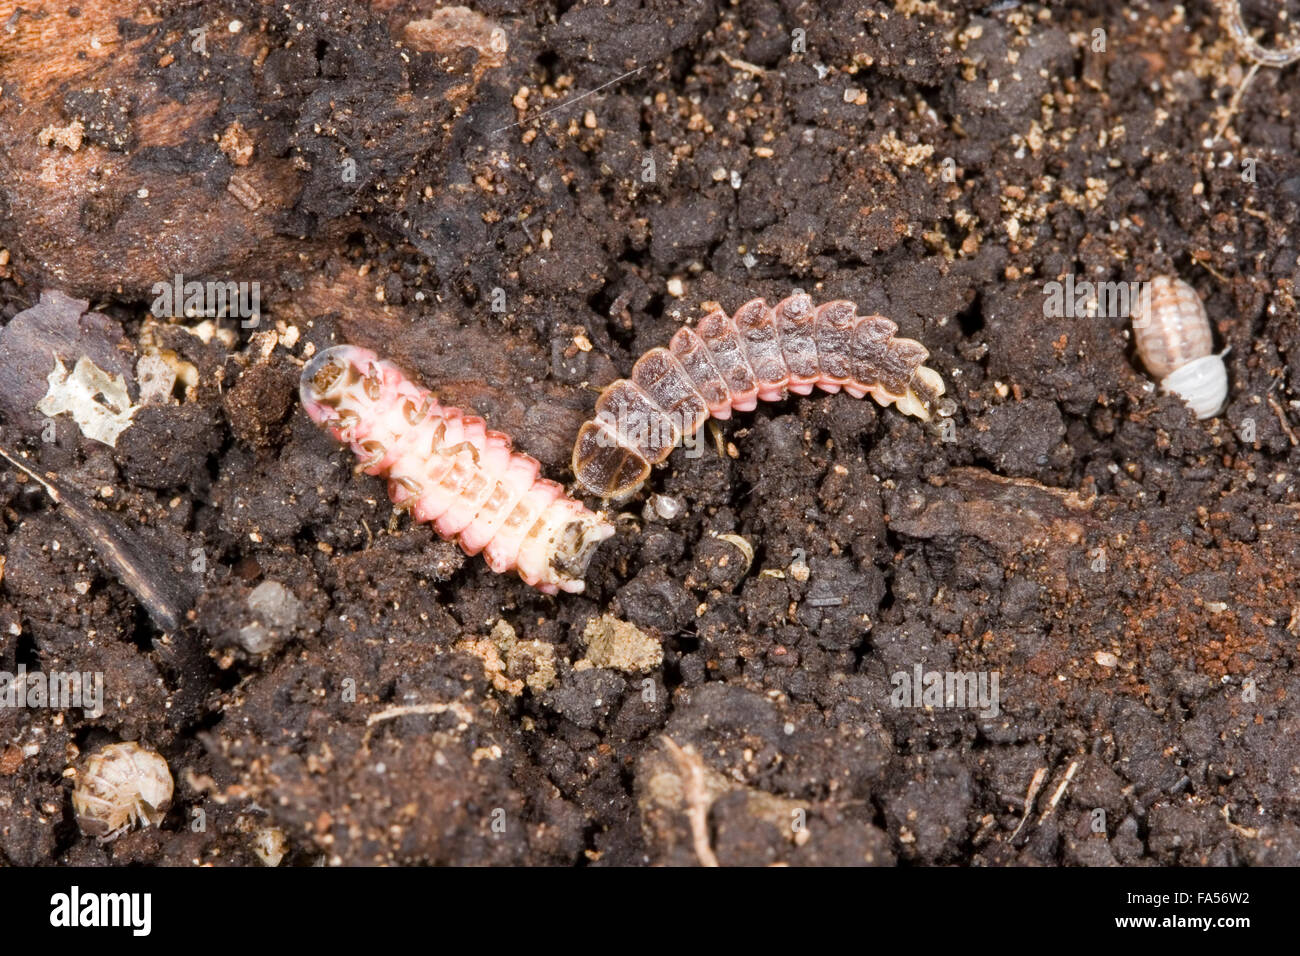 Two firefly larva or glowworms. Stock Photo